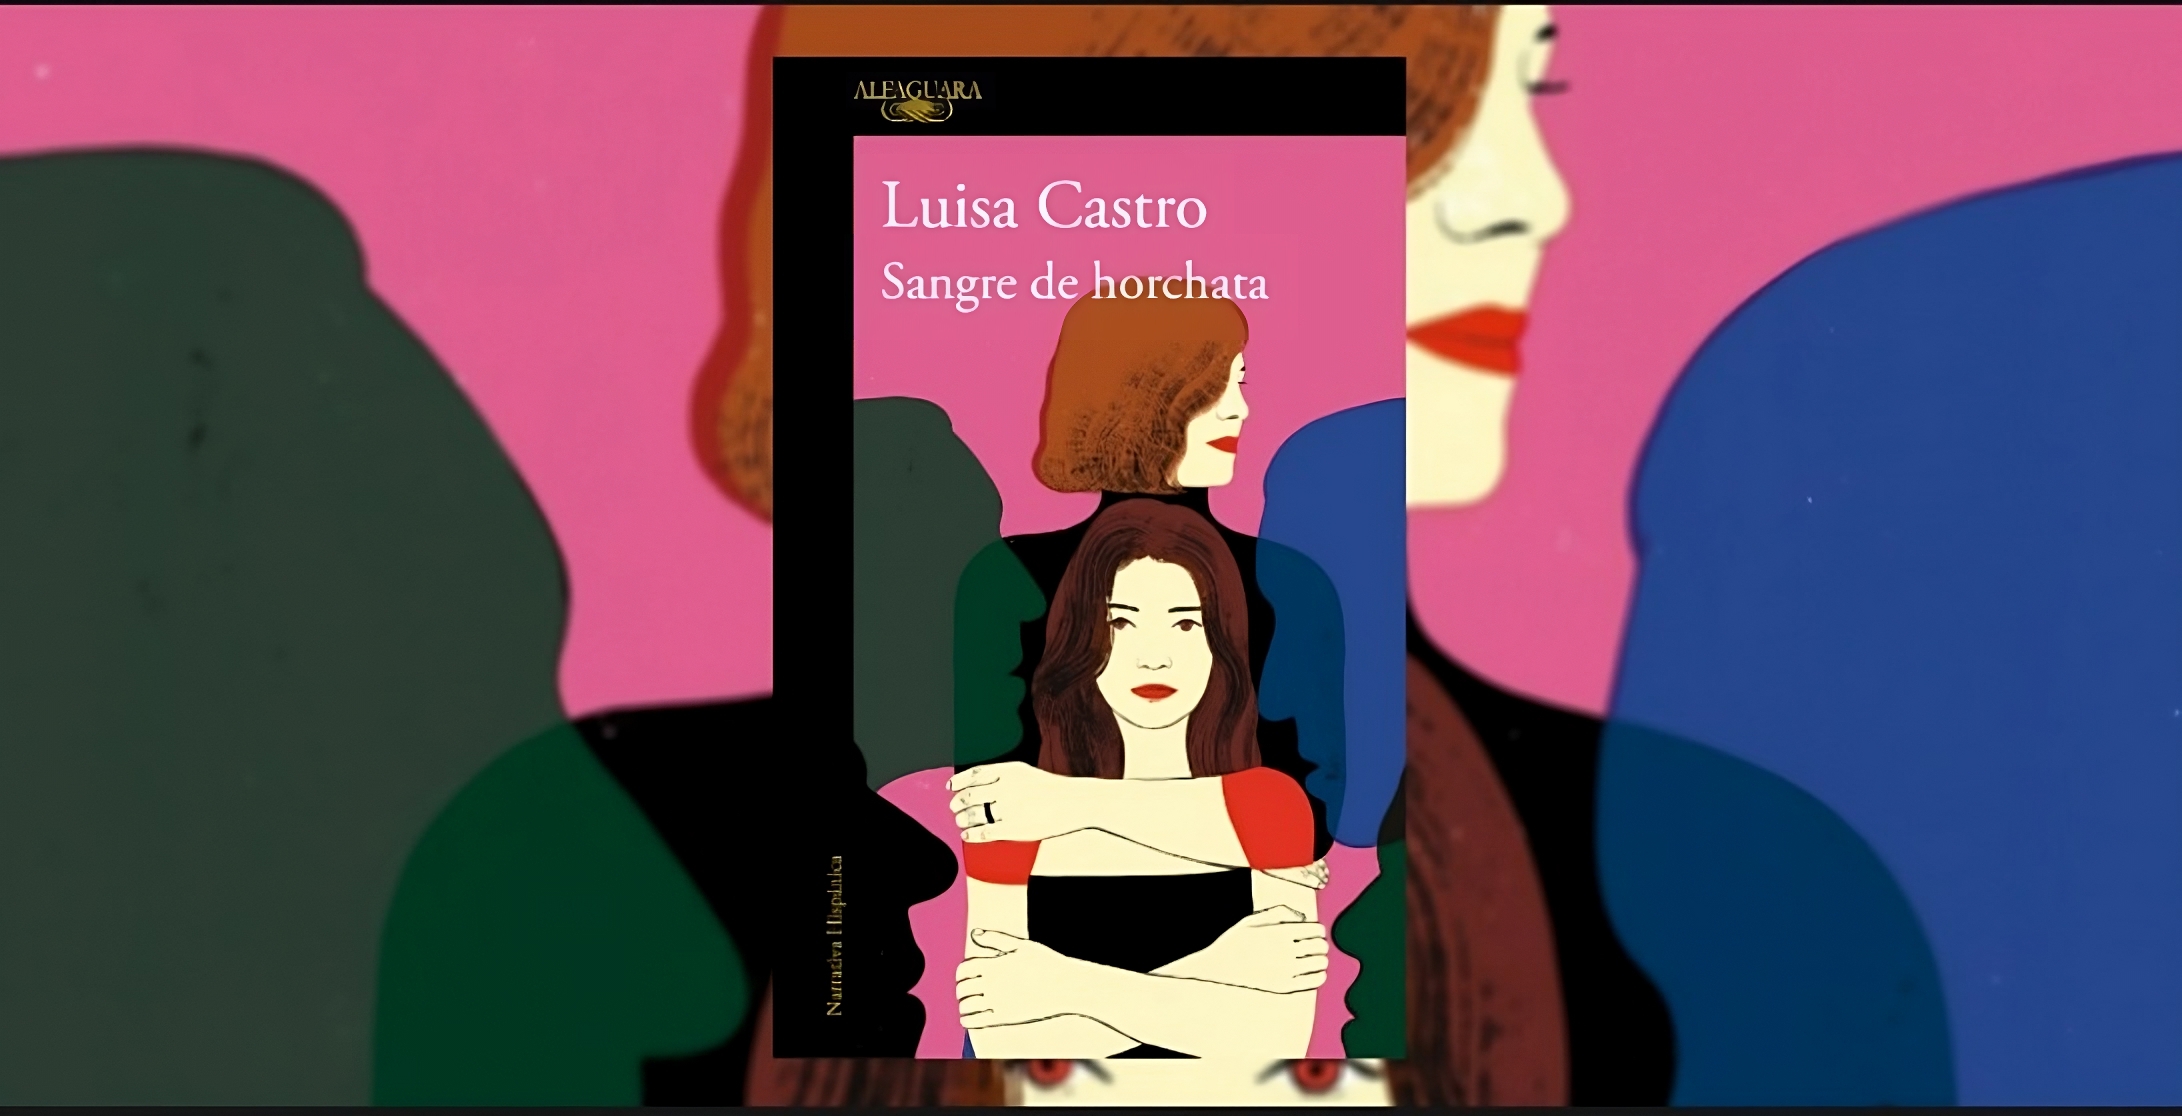 Portada del libro "Sangre de horchata", de Luisa Castro. (Penguin Random House).